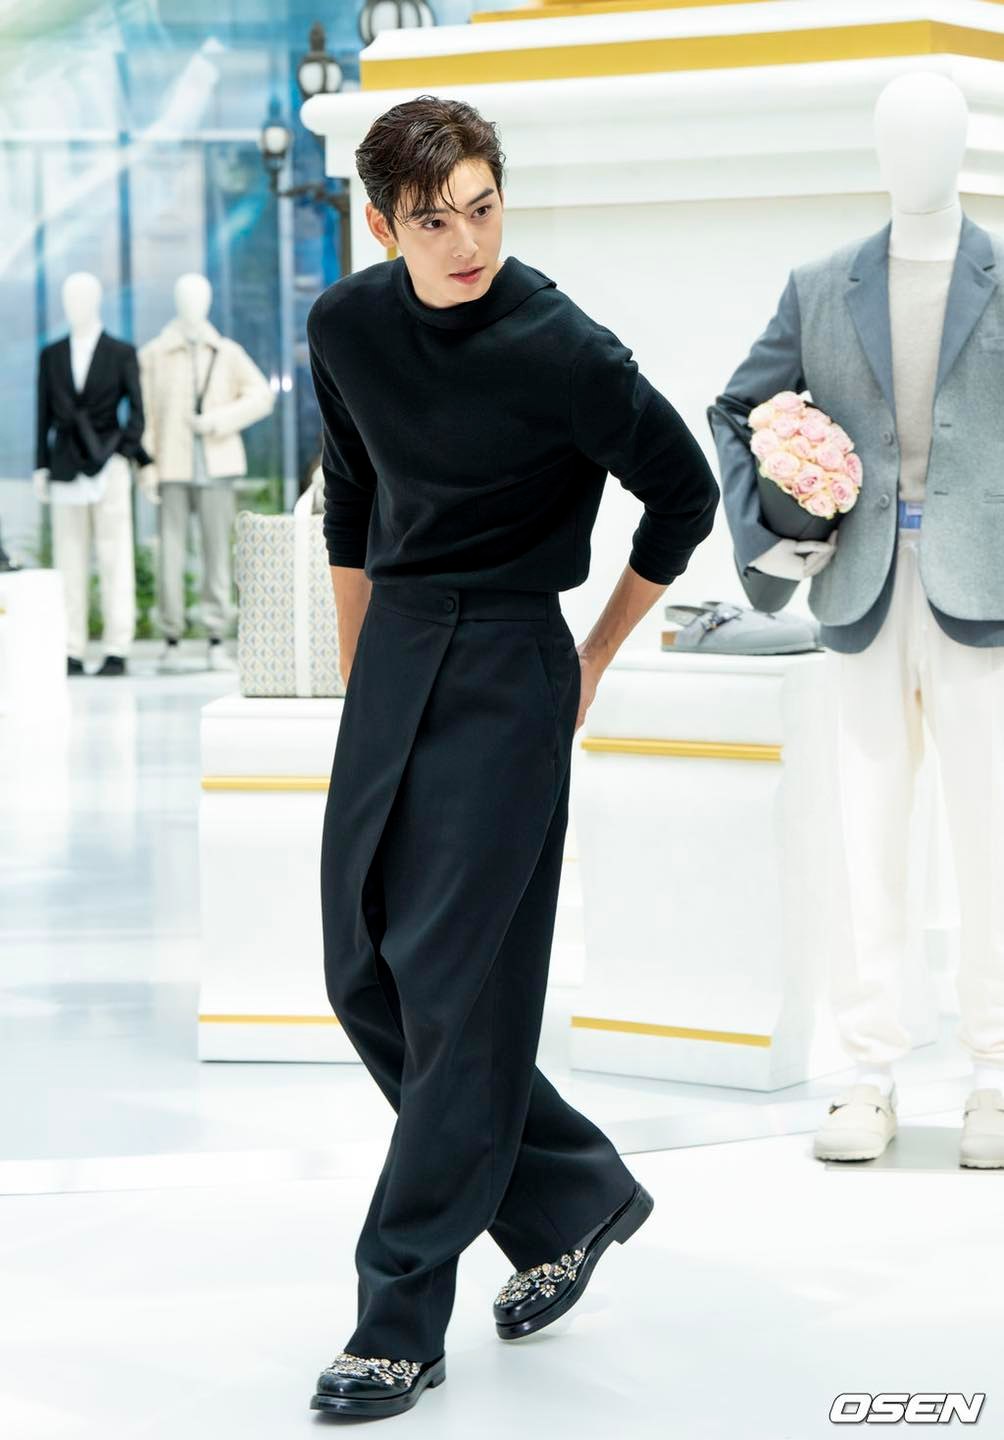 Netizens phẫn nộ khi Dior 3 lần sửa danh phận của Sehun EXO